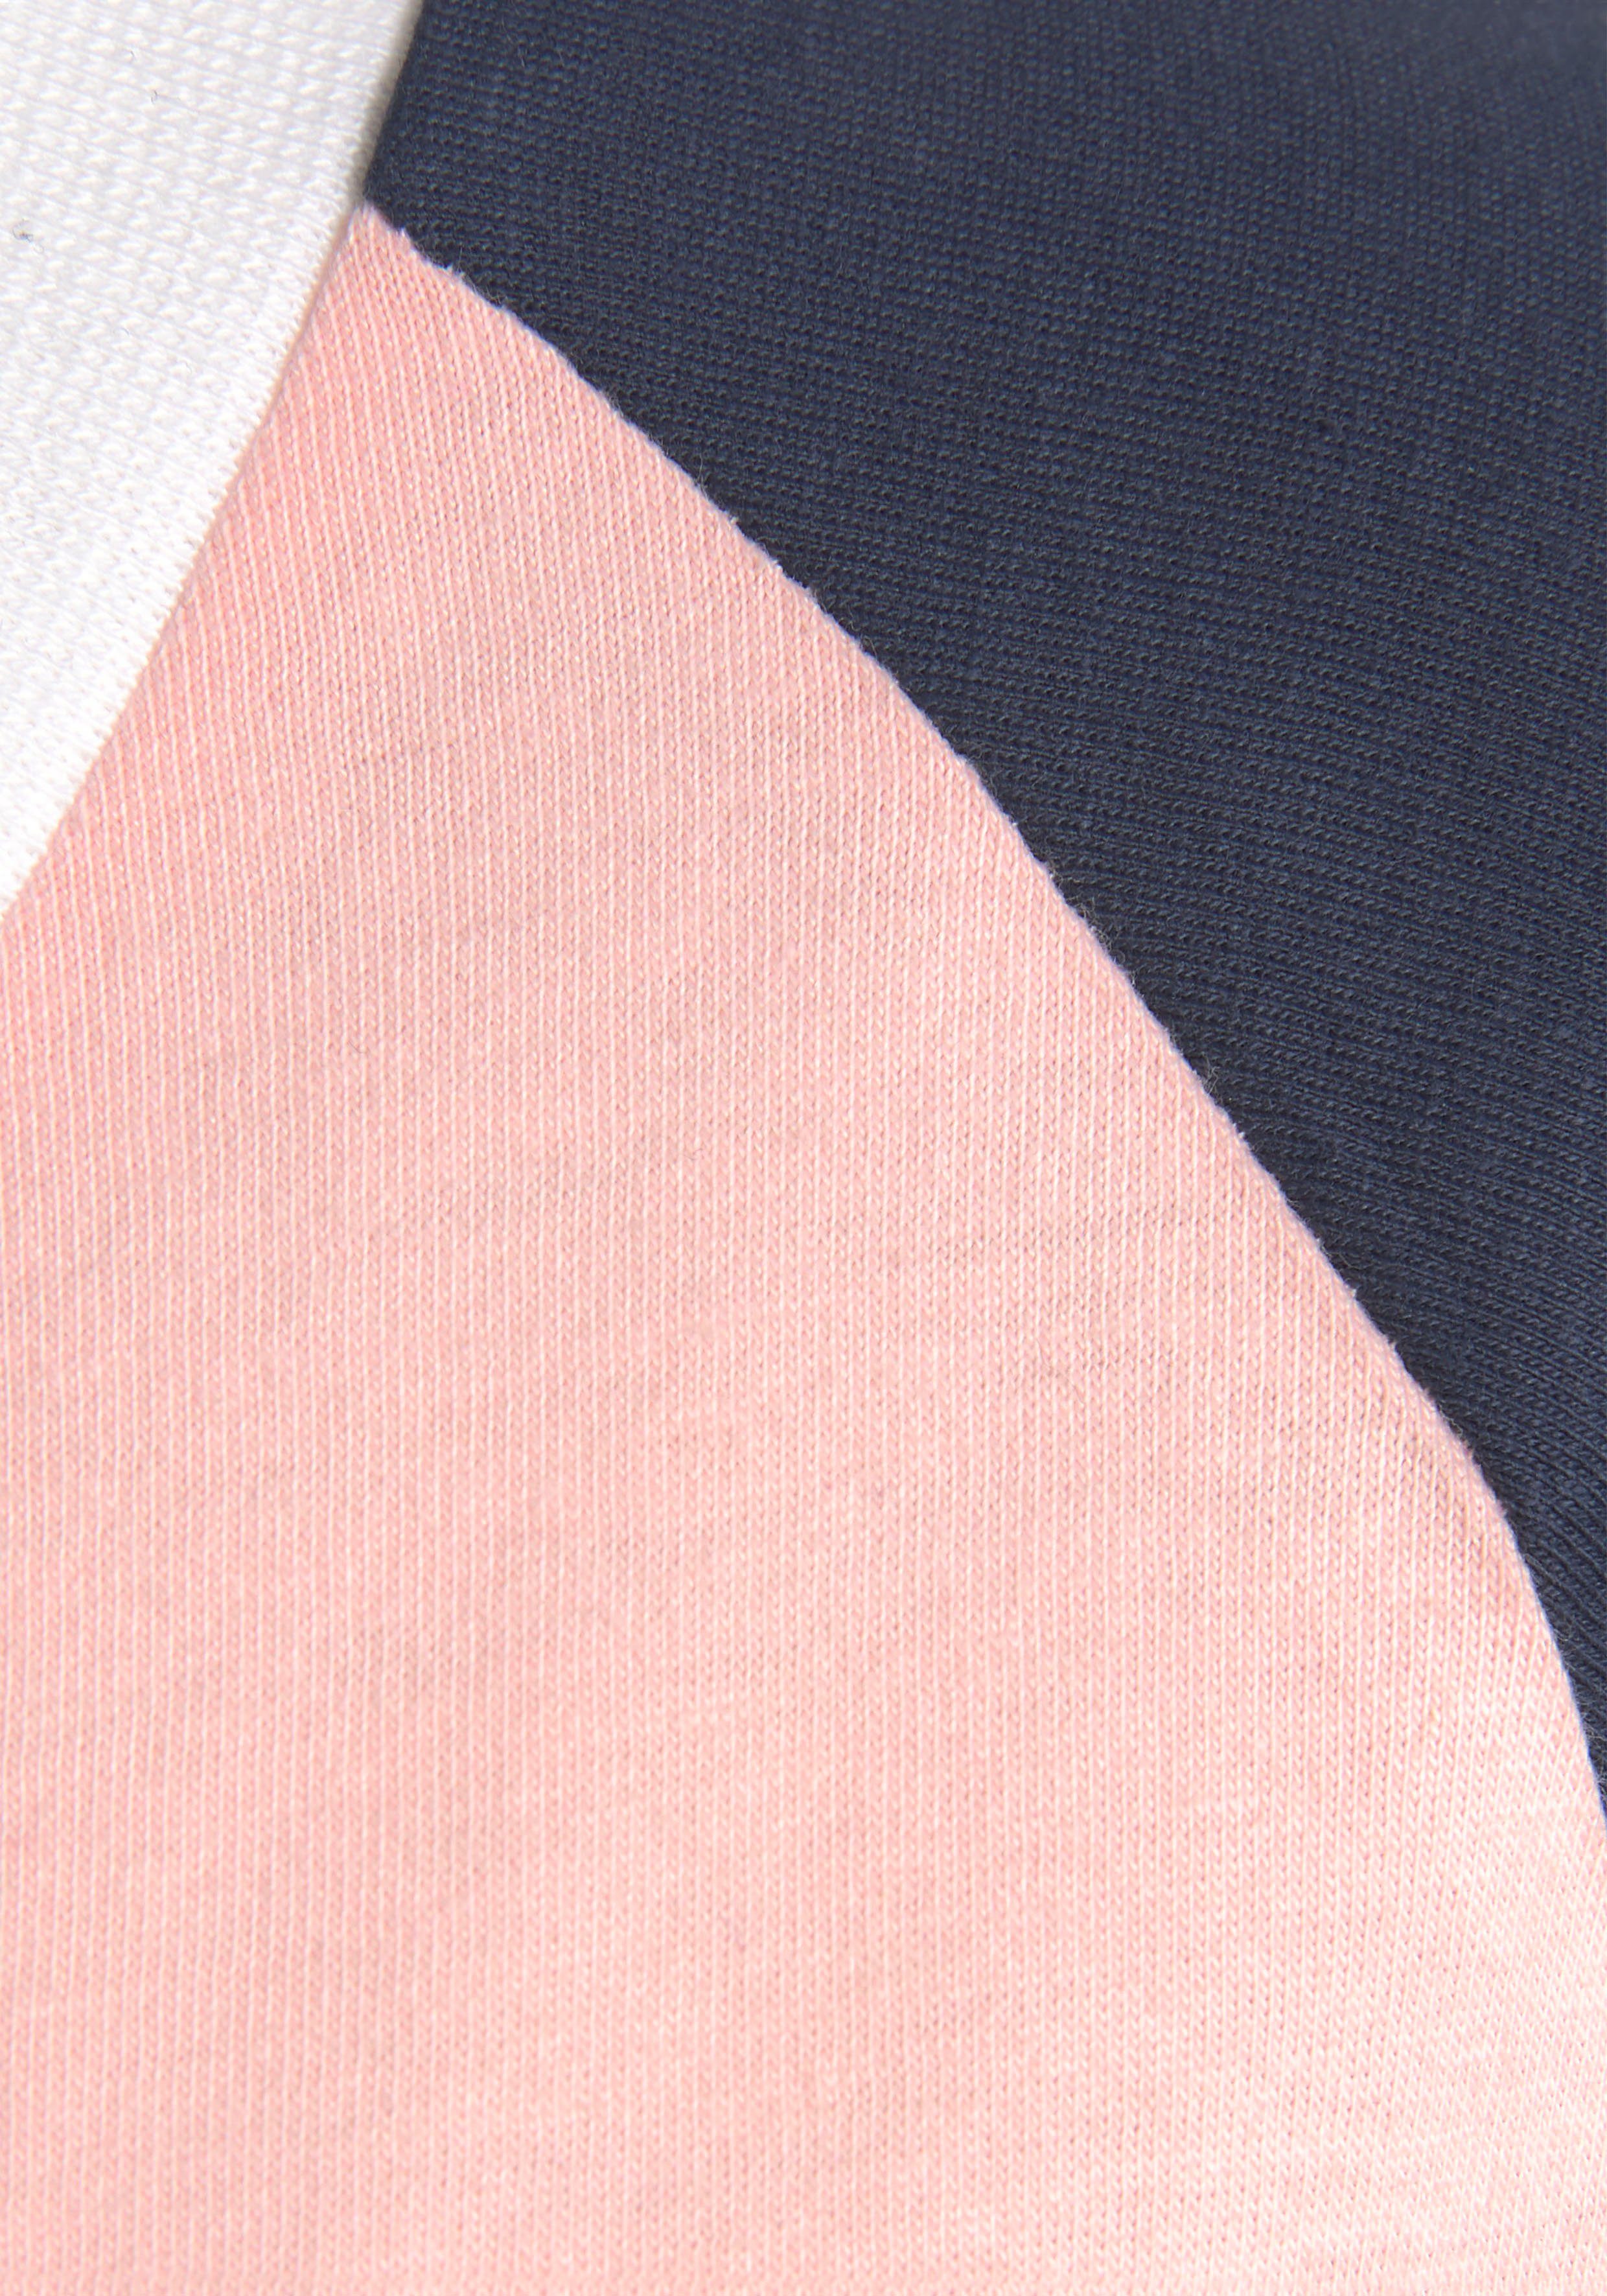 (2 Stück) Raglanärmeln mit Pyjama kontrastfarbenen rosa-dunkelblau tlg., KangaROOS 1